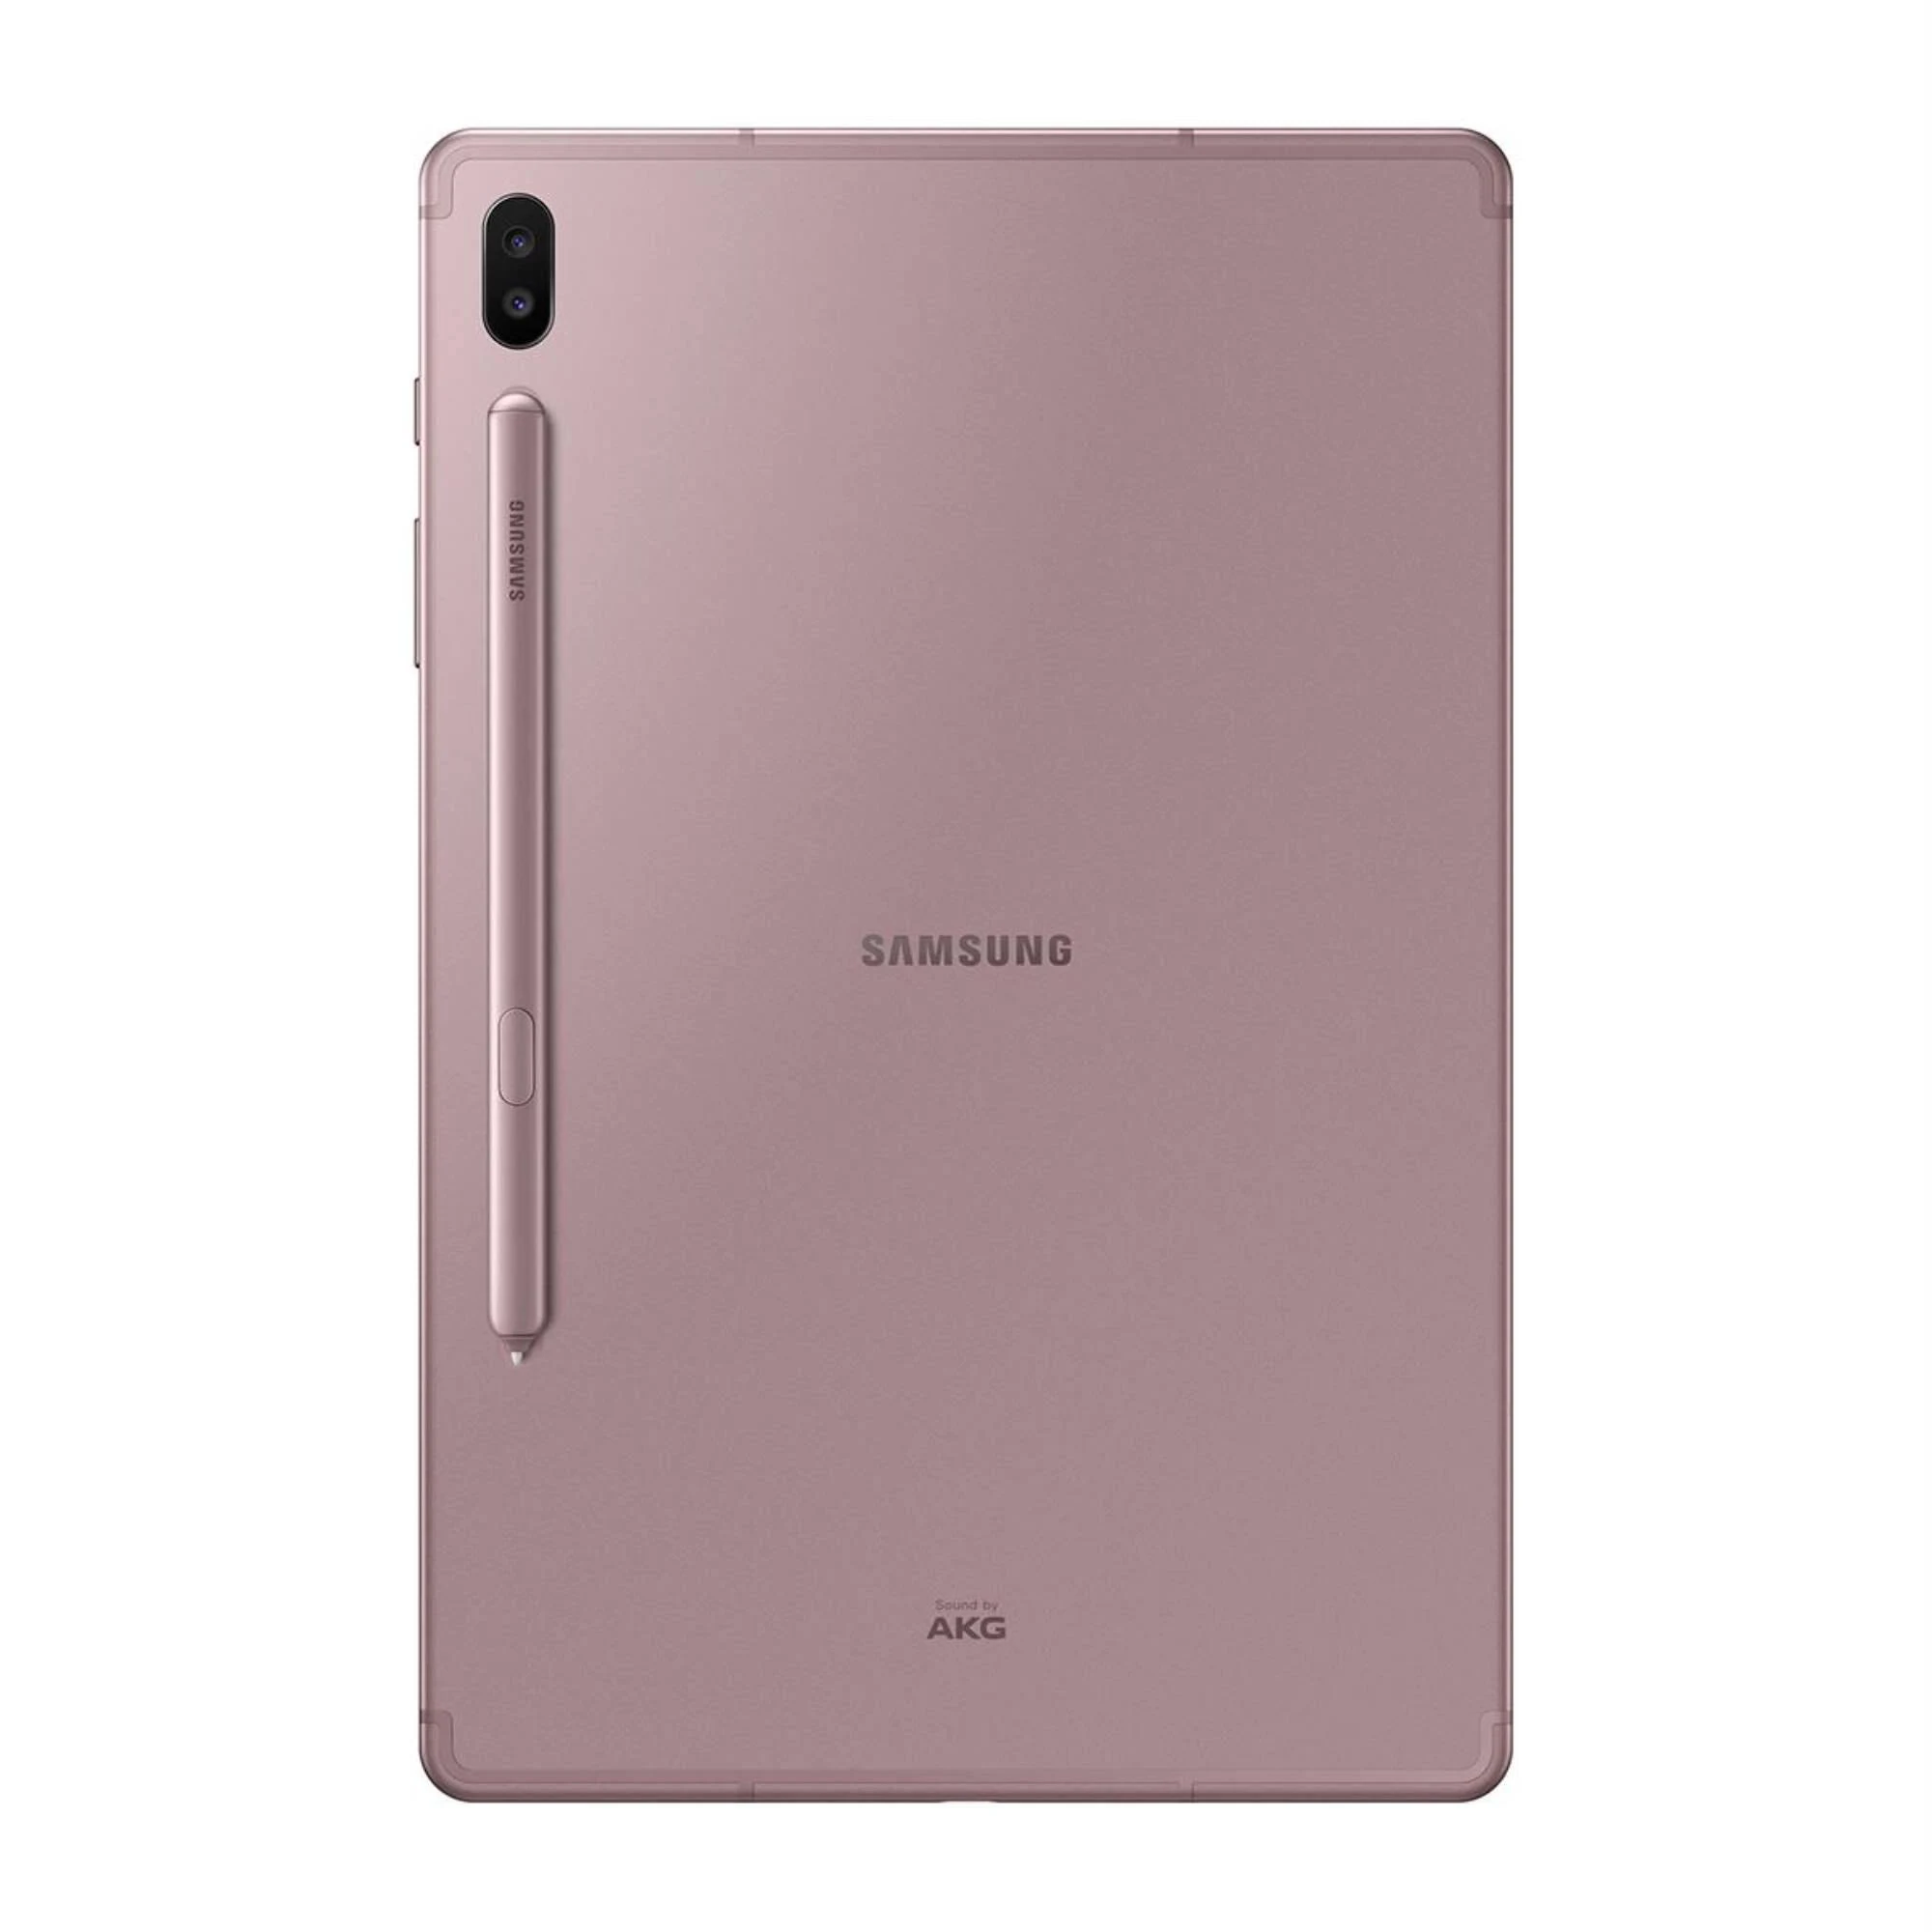 Samsung 10.5 inch Galaxy Tab S6 256 GB Android 9.0 Pie Wi-Fi Rose Blush SM-T860NZNLXAR